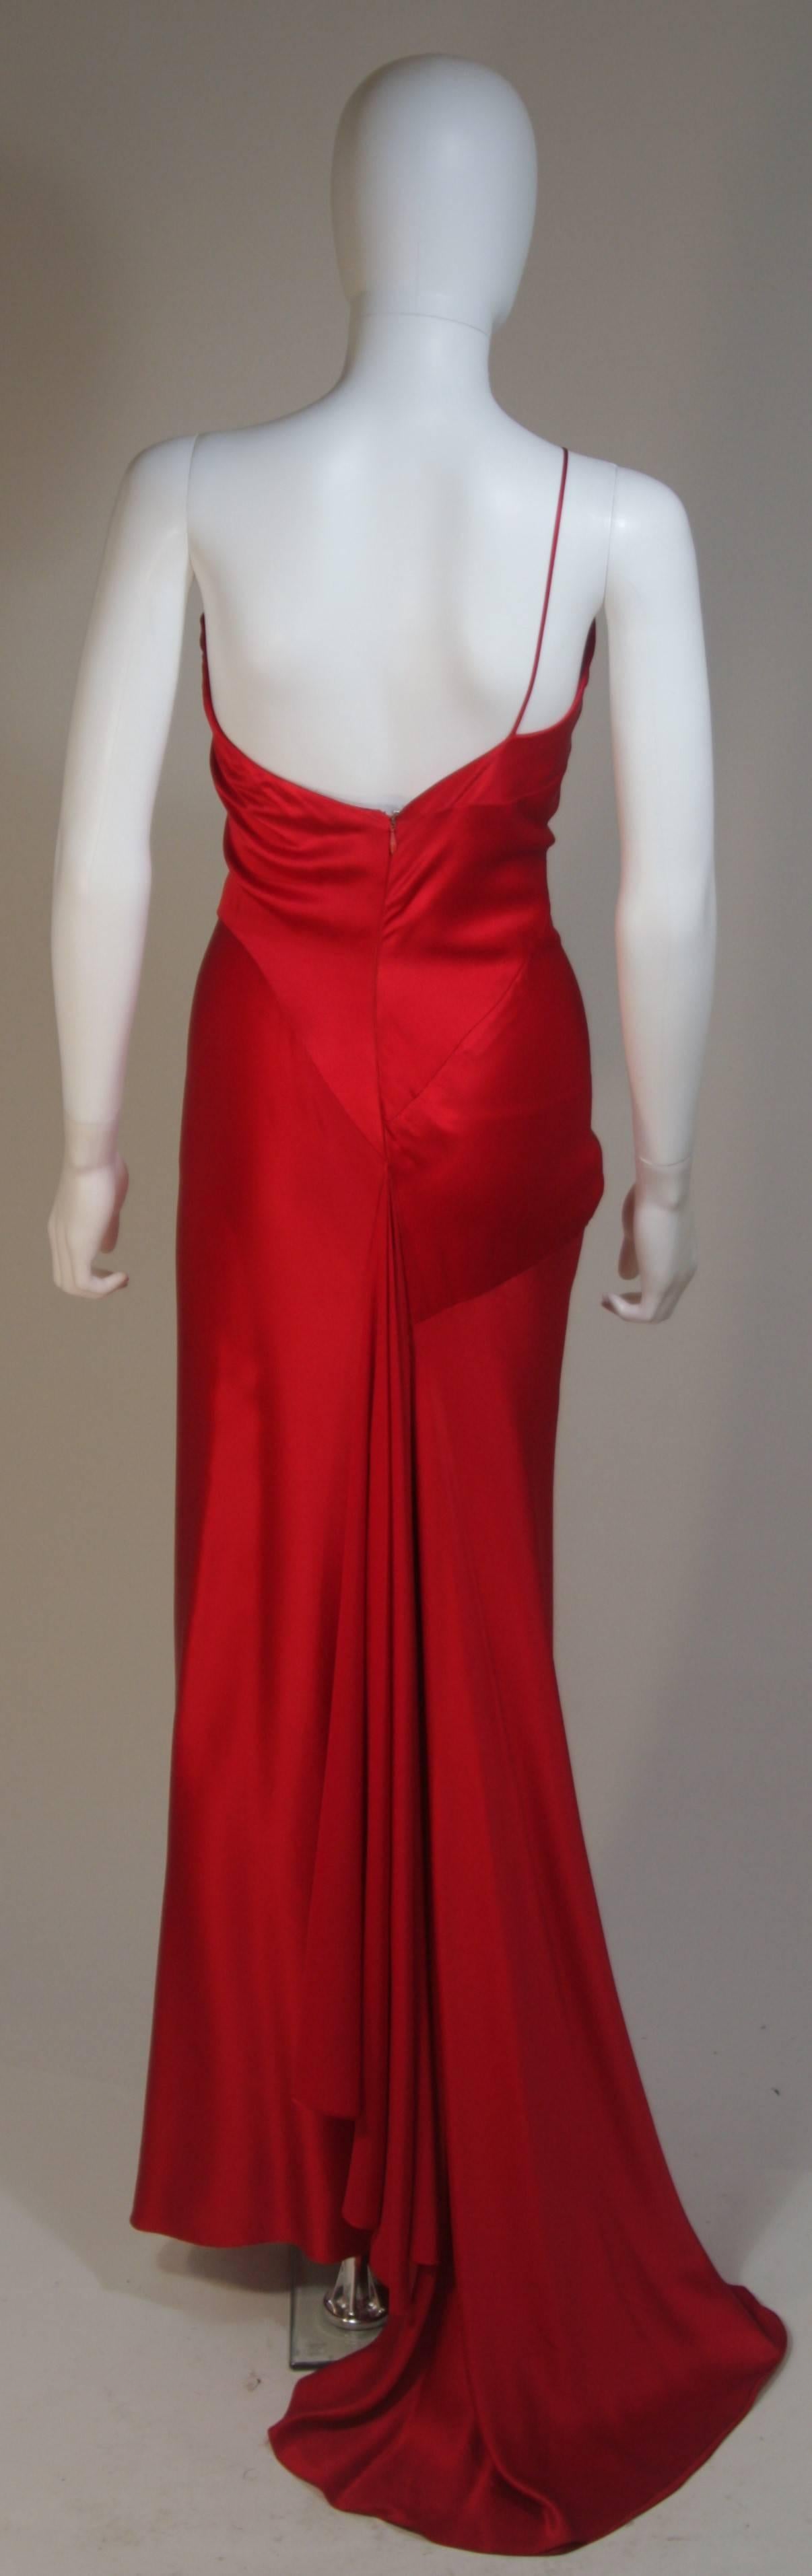 CANTU & CASTILLO Red Silk Bias Cut Asymmetrical Gown Size 2-4 For Sale 4